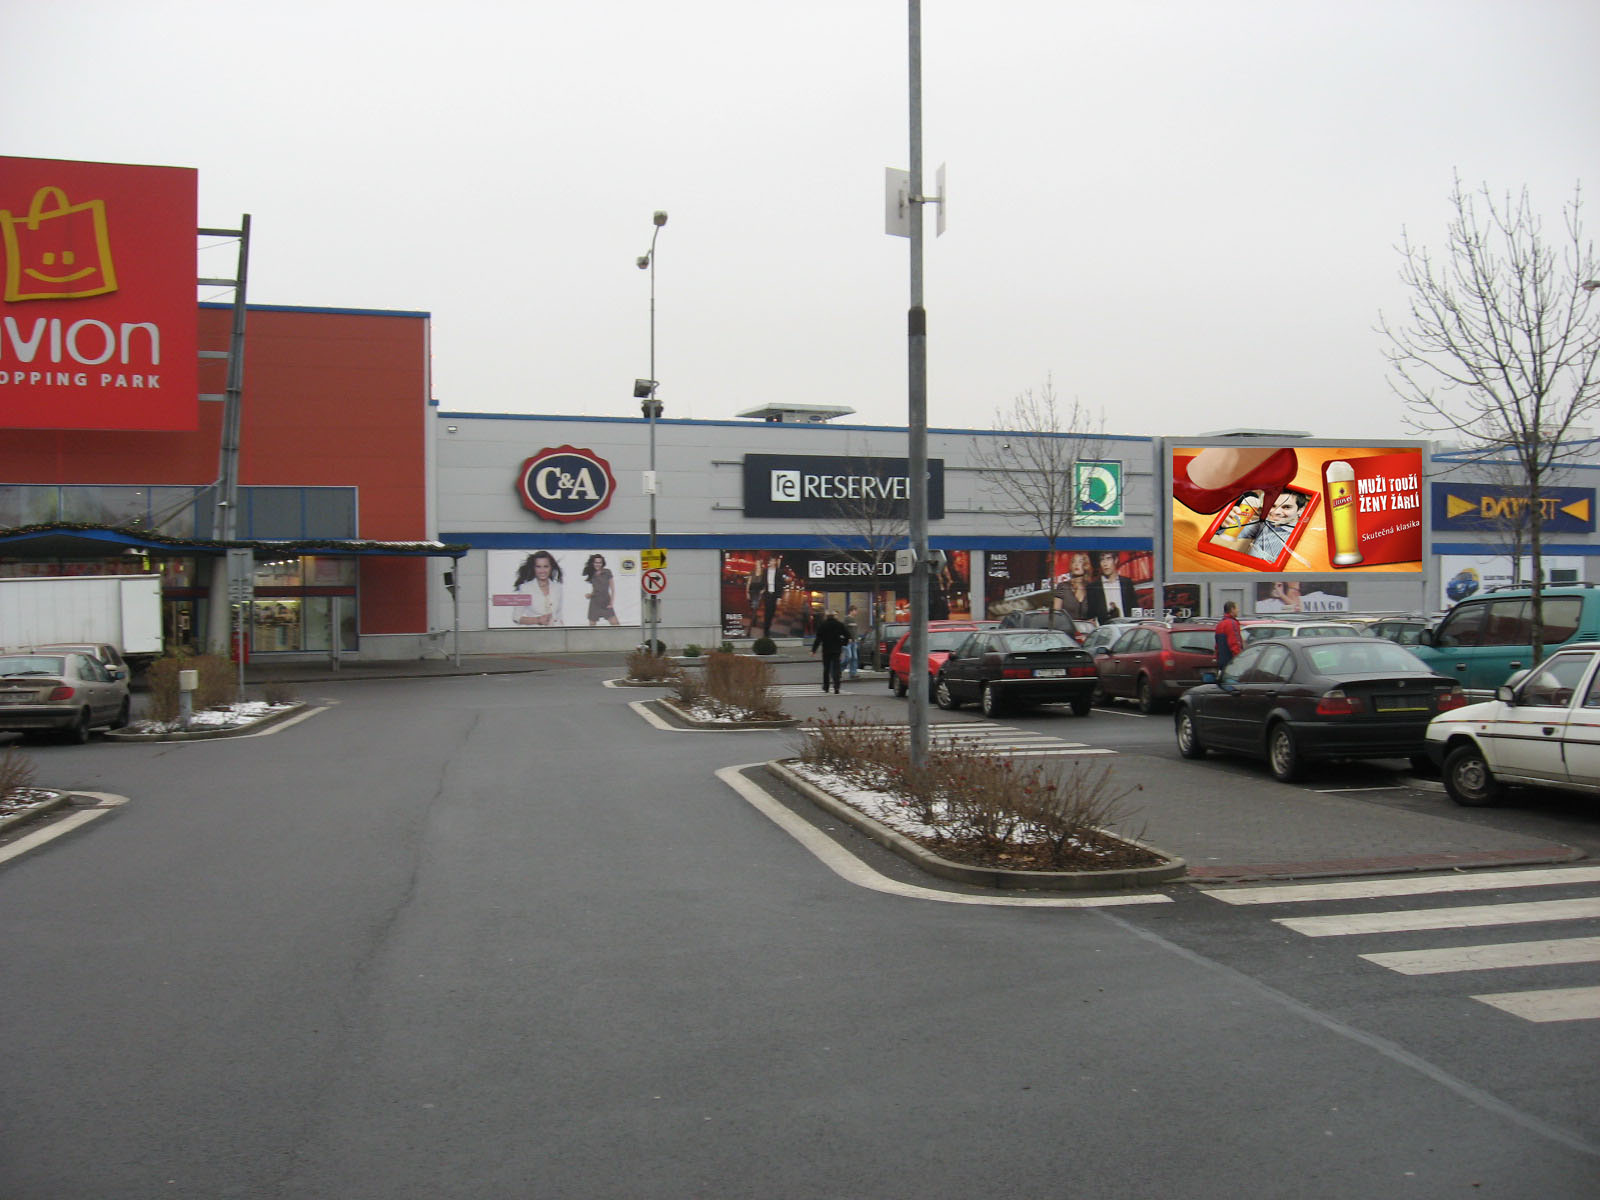 871123 Billboard, Ostrava (OC AVION Shopping Park Ostrava)